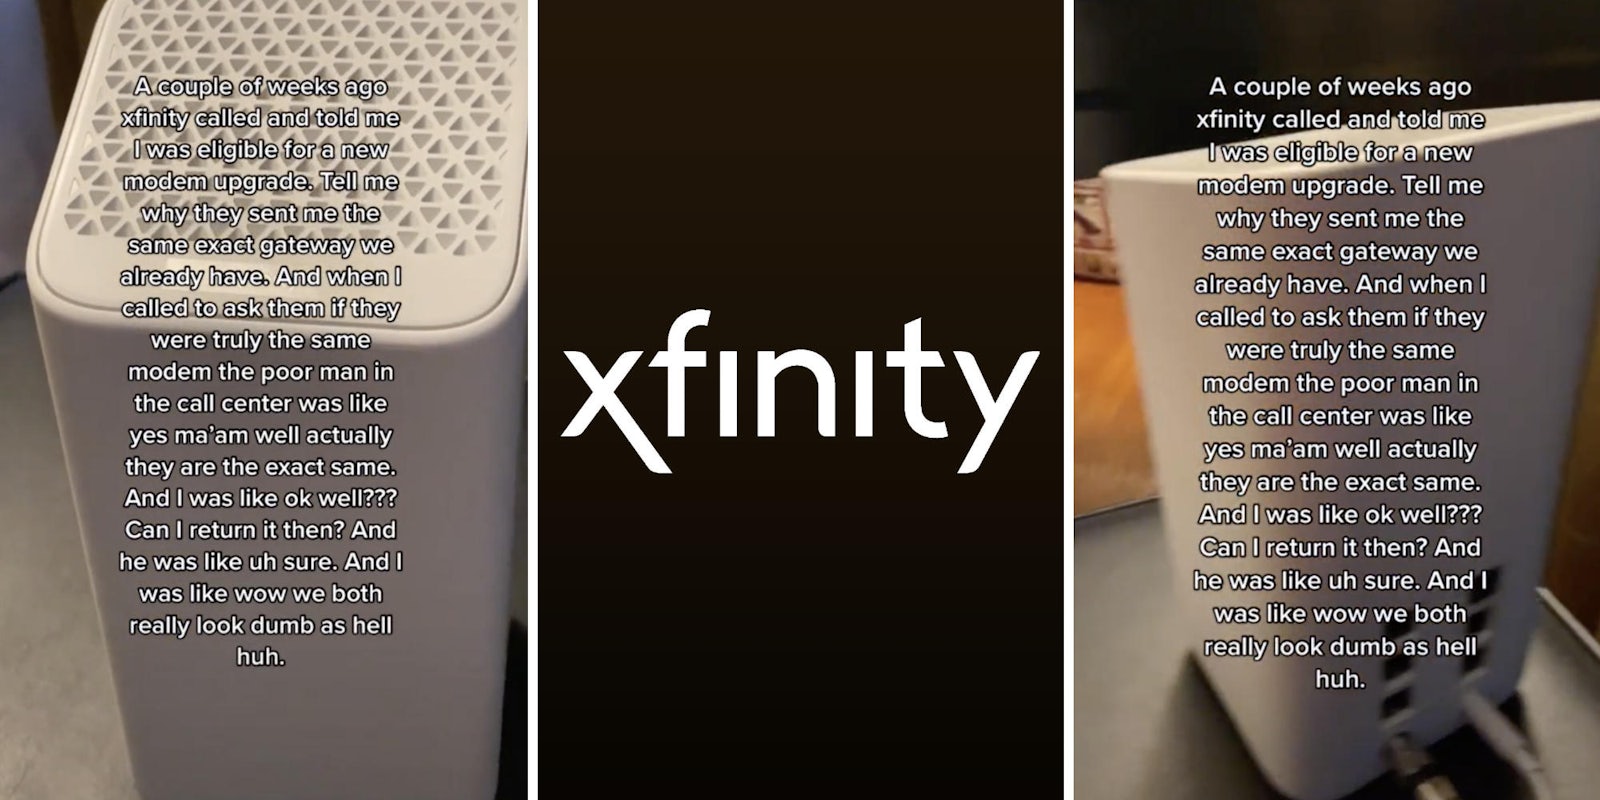 xfinity computer modem (l) (r) xfinity logo (c)